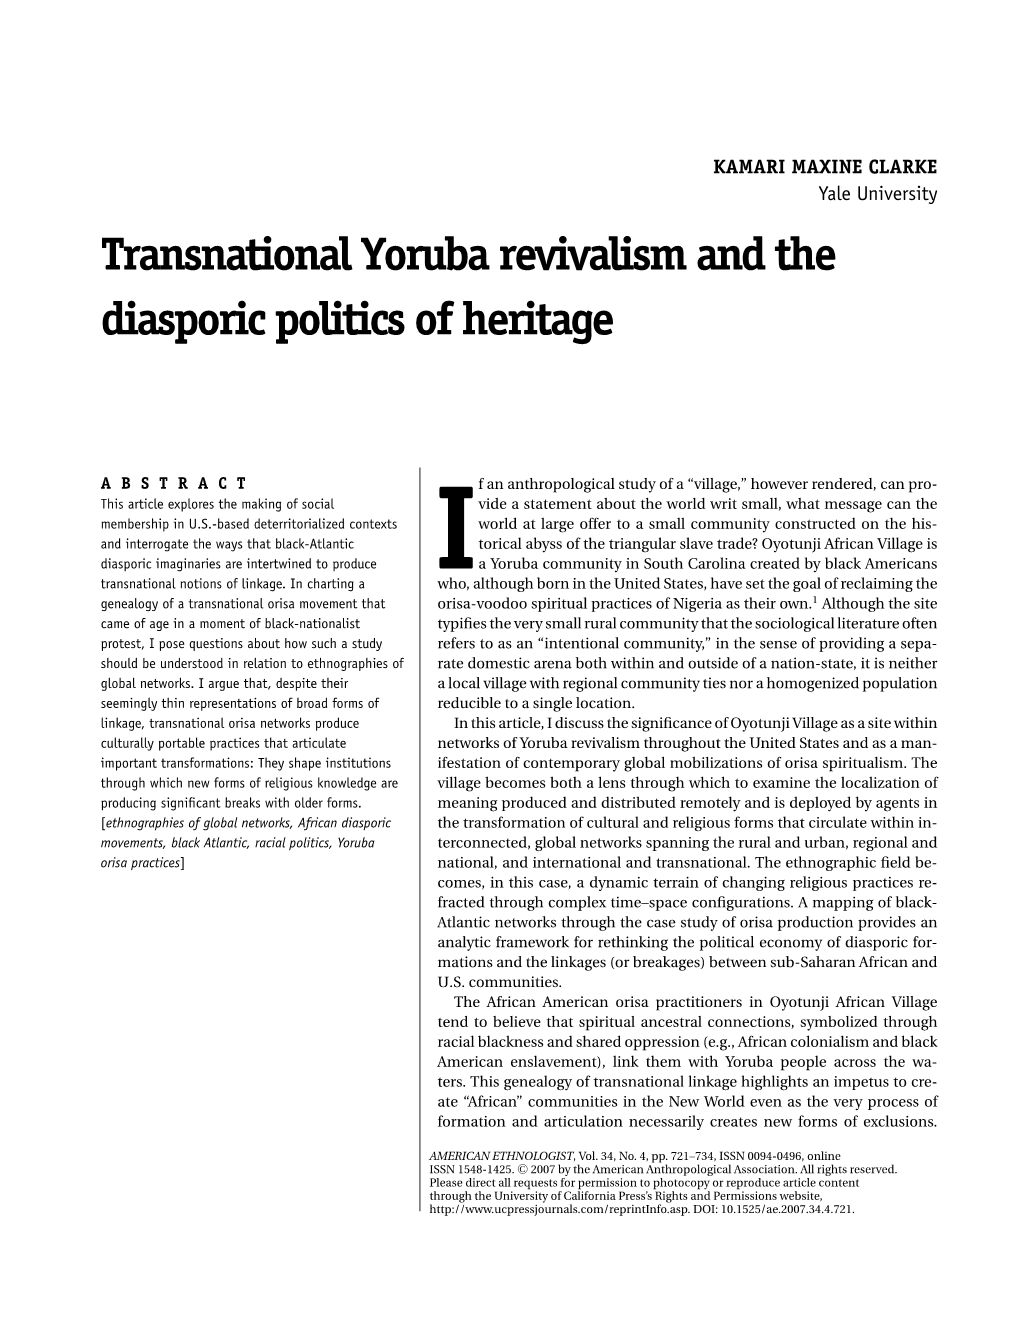 Transnational Yoruba Revivalism and the Diasporic Politics of Heritage